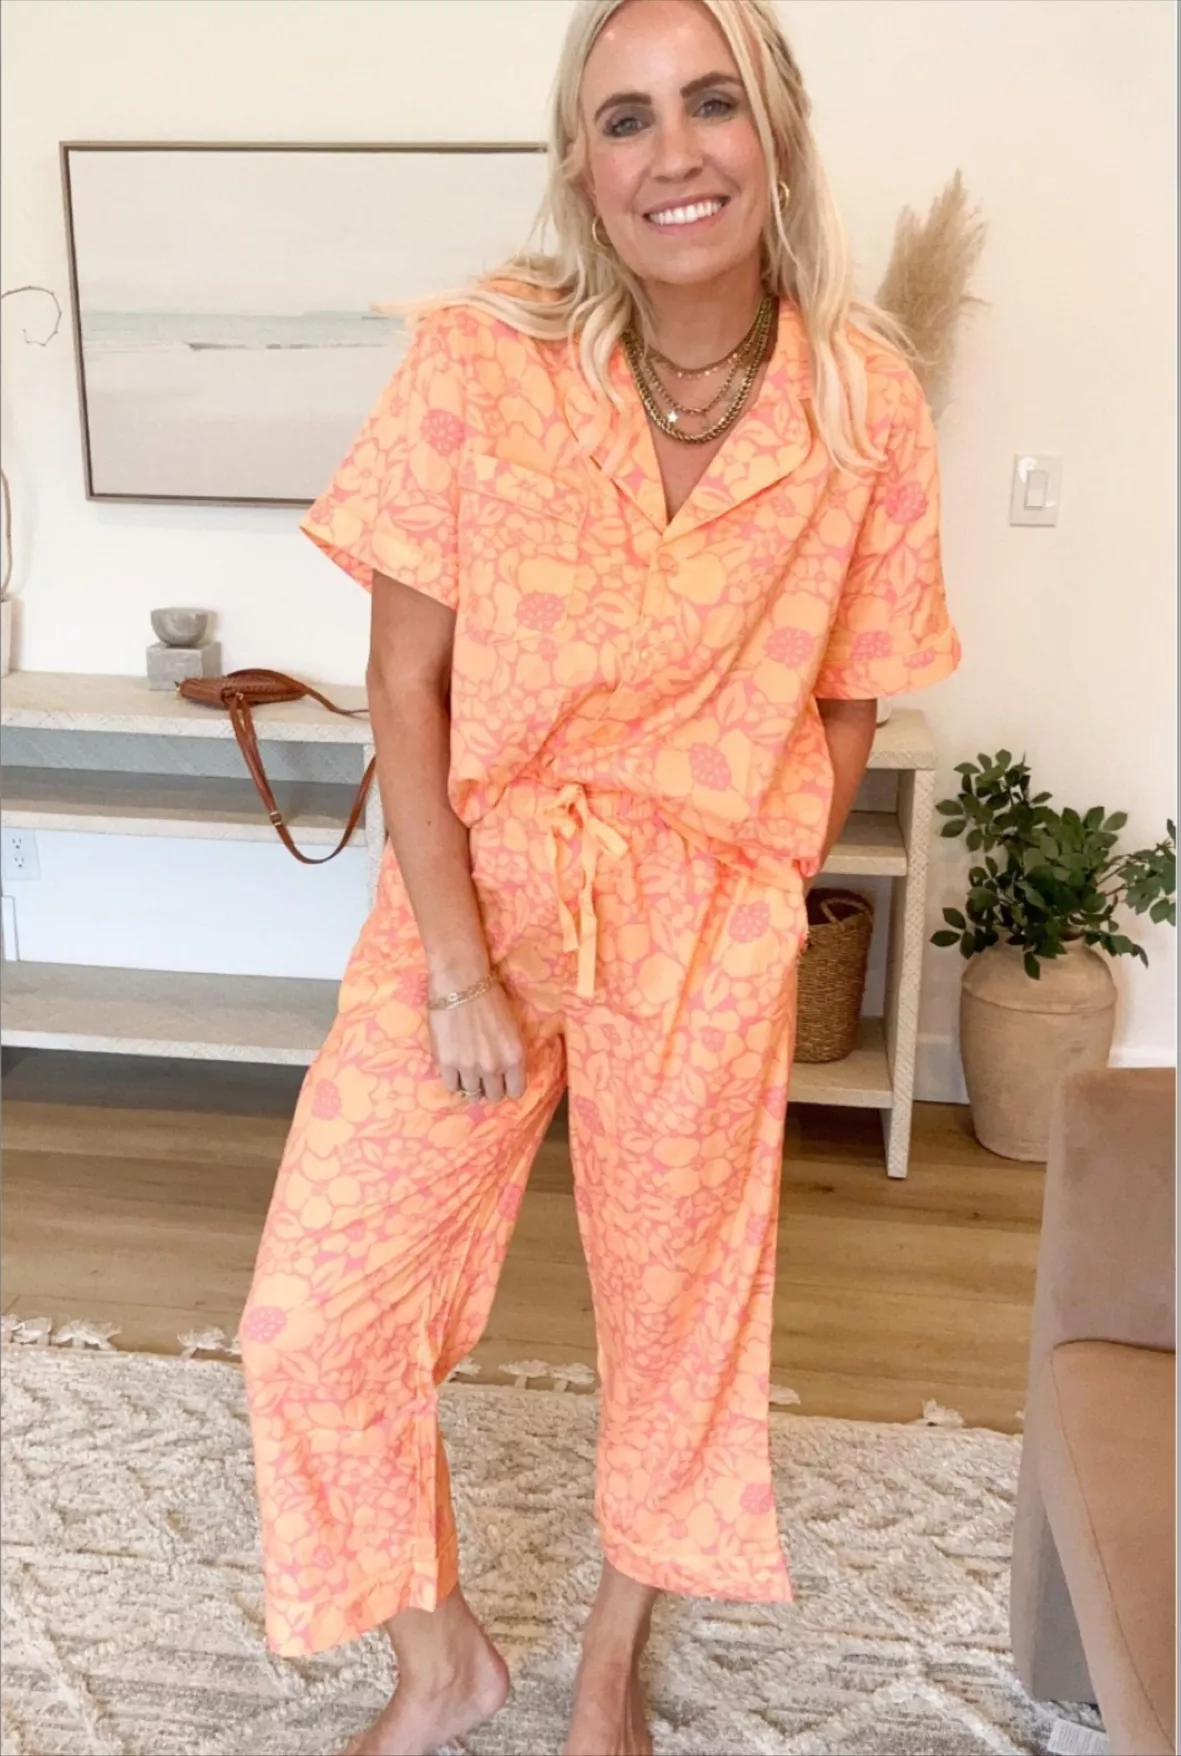 Joyspun Women's Woven Cropped Pajama Pants, Sizes S to 3X 